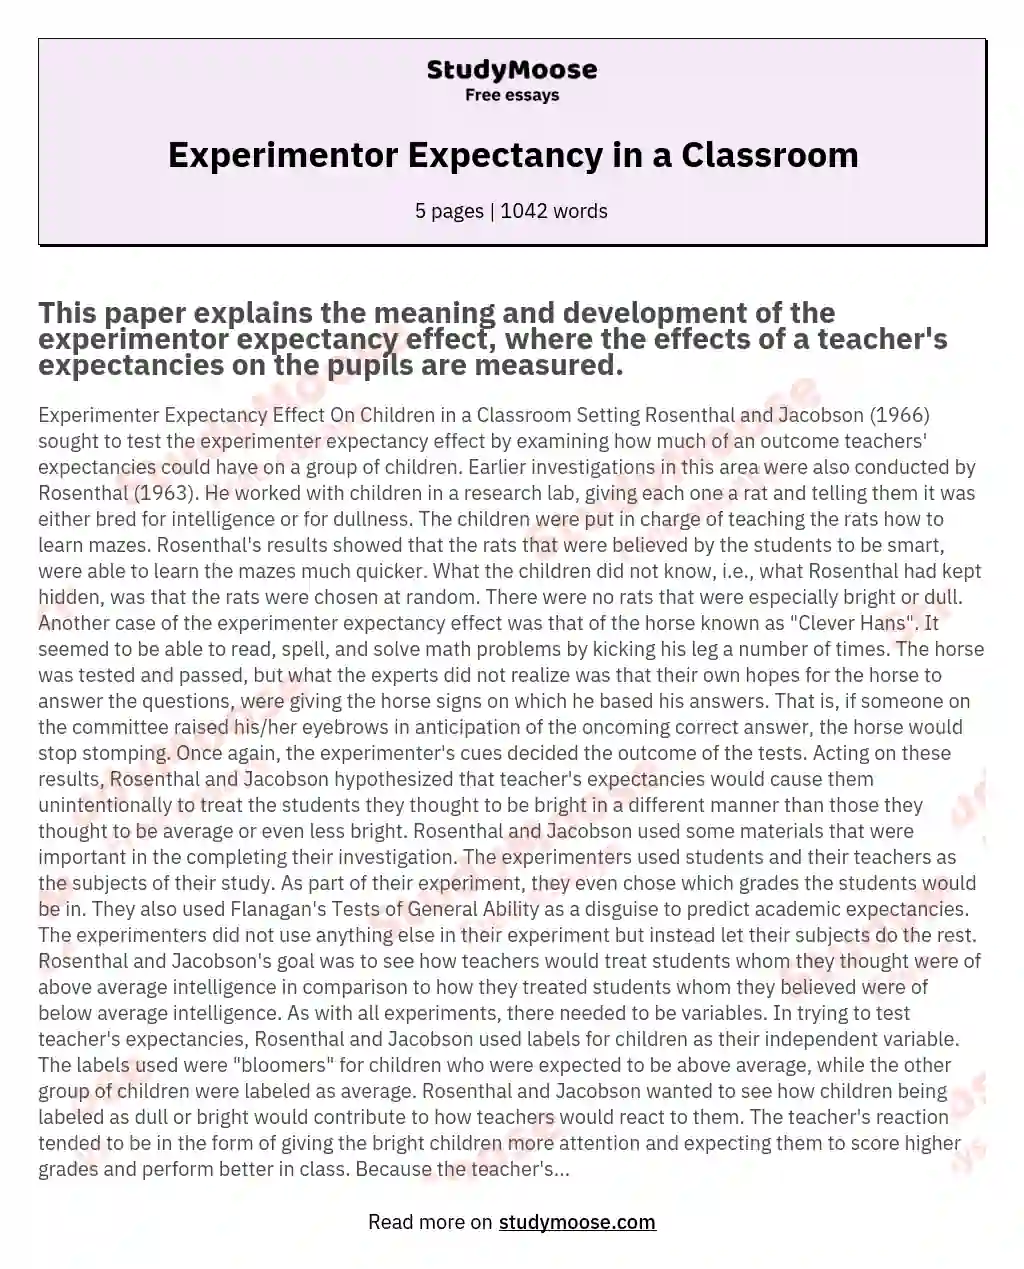 Experimentor Expectancy in a Classroom